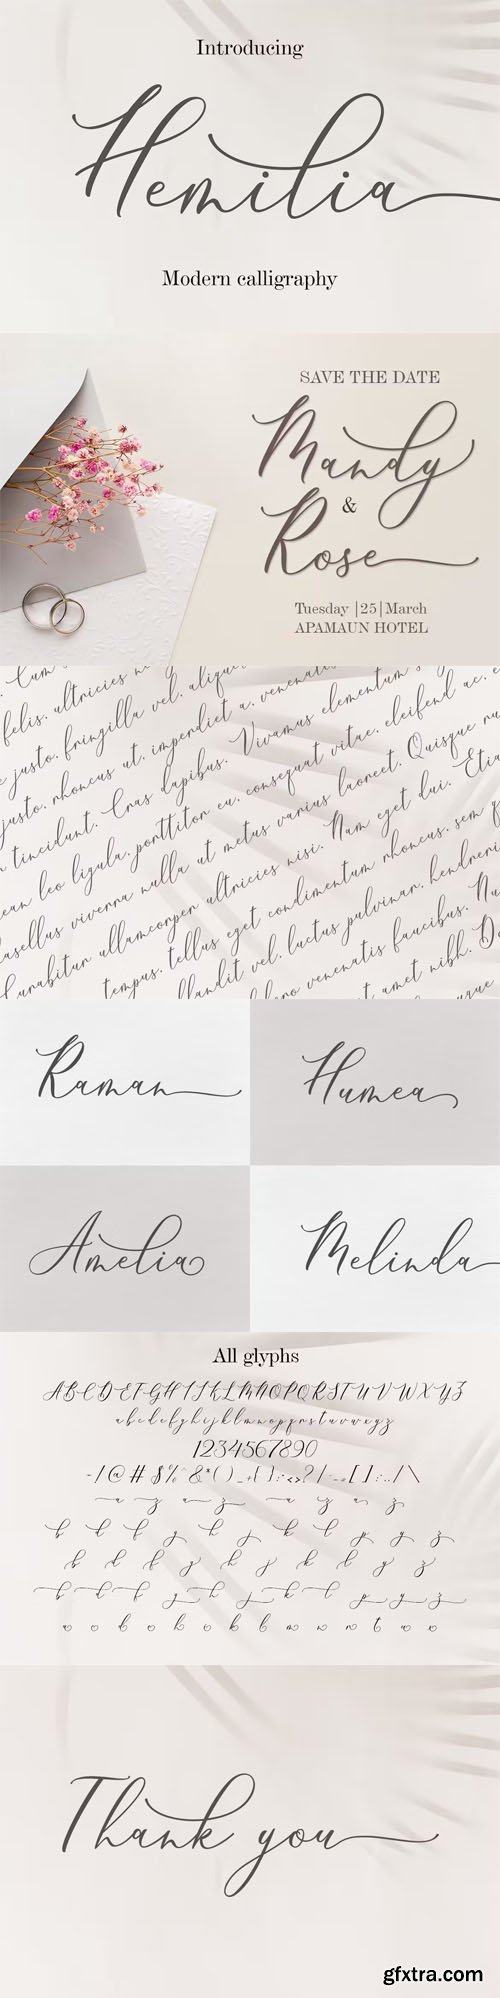 Hemilia Calligraphy Font